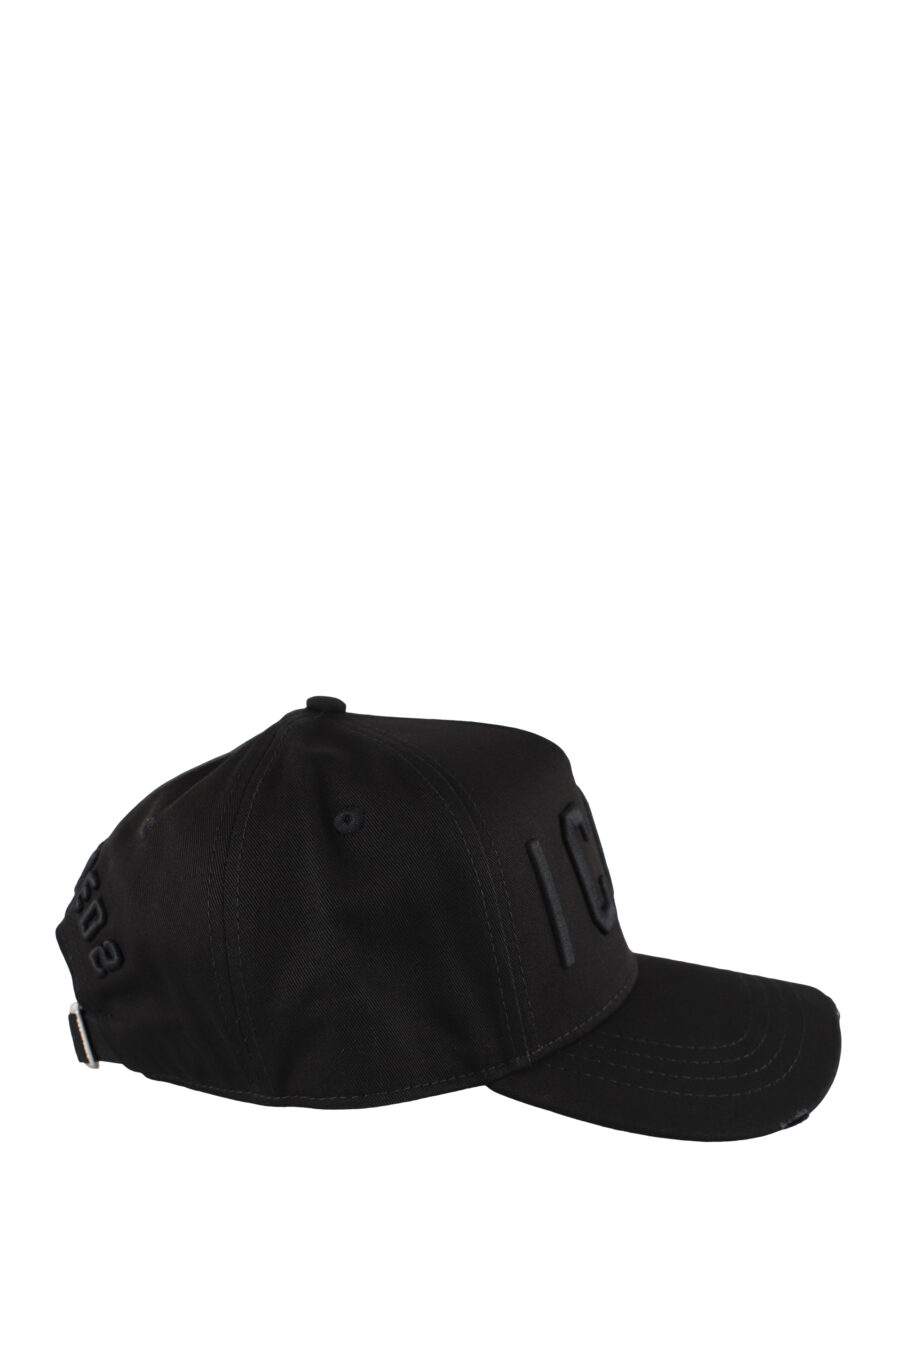 Black cap with monochrome "icon" logo - IMG 5165